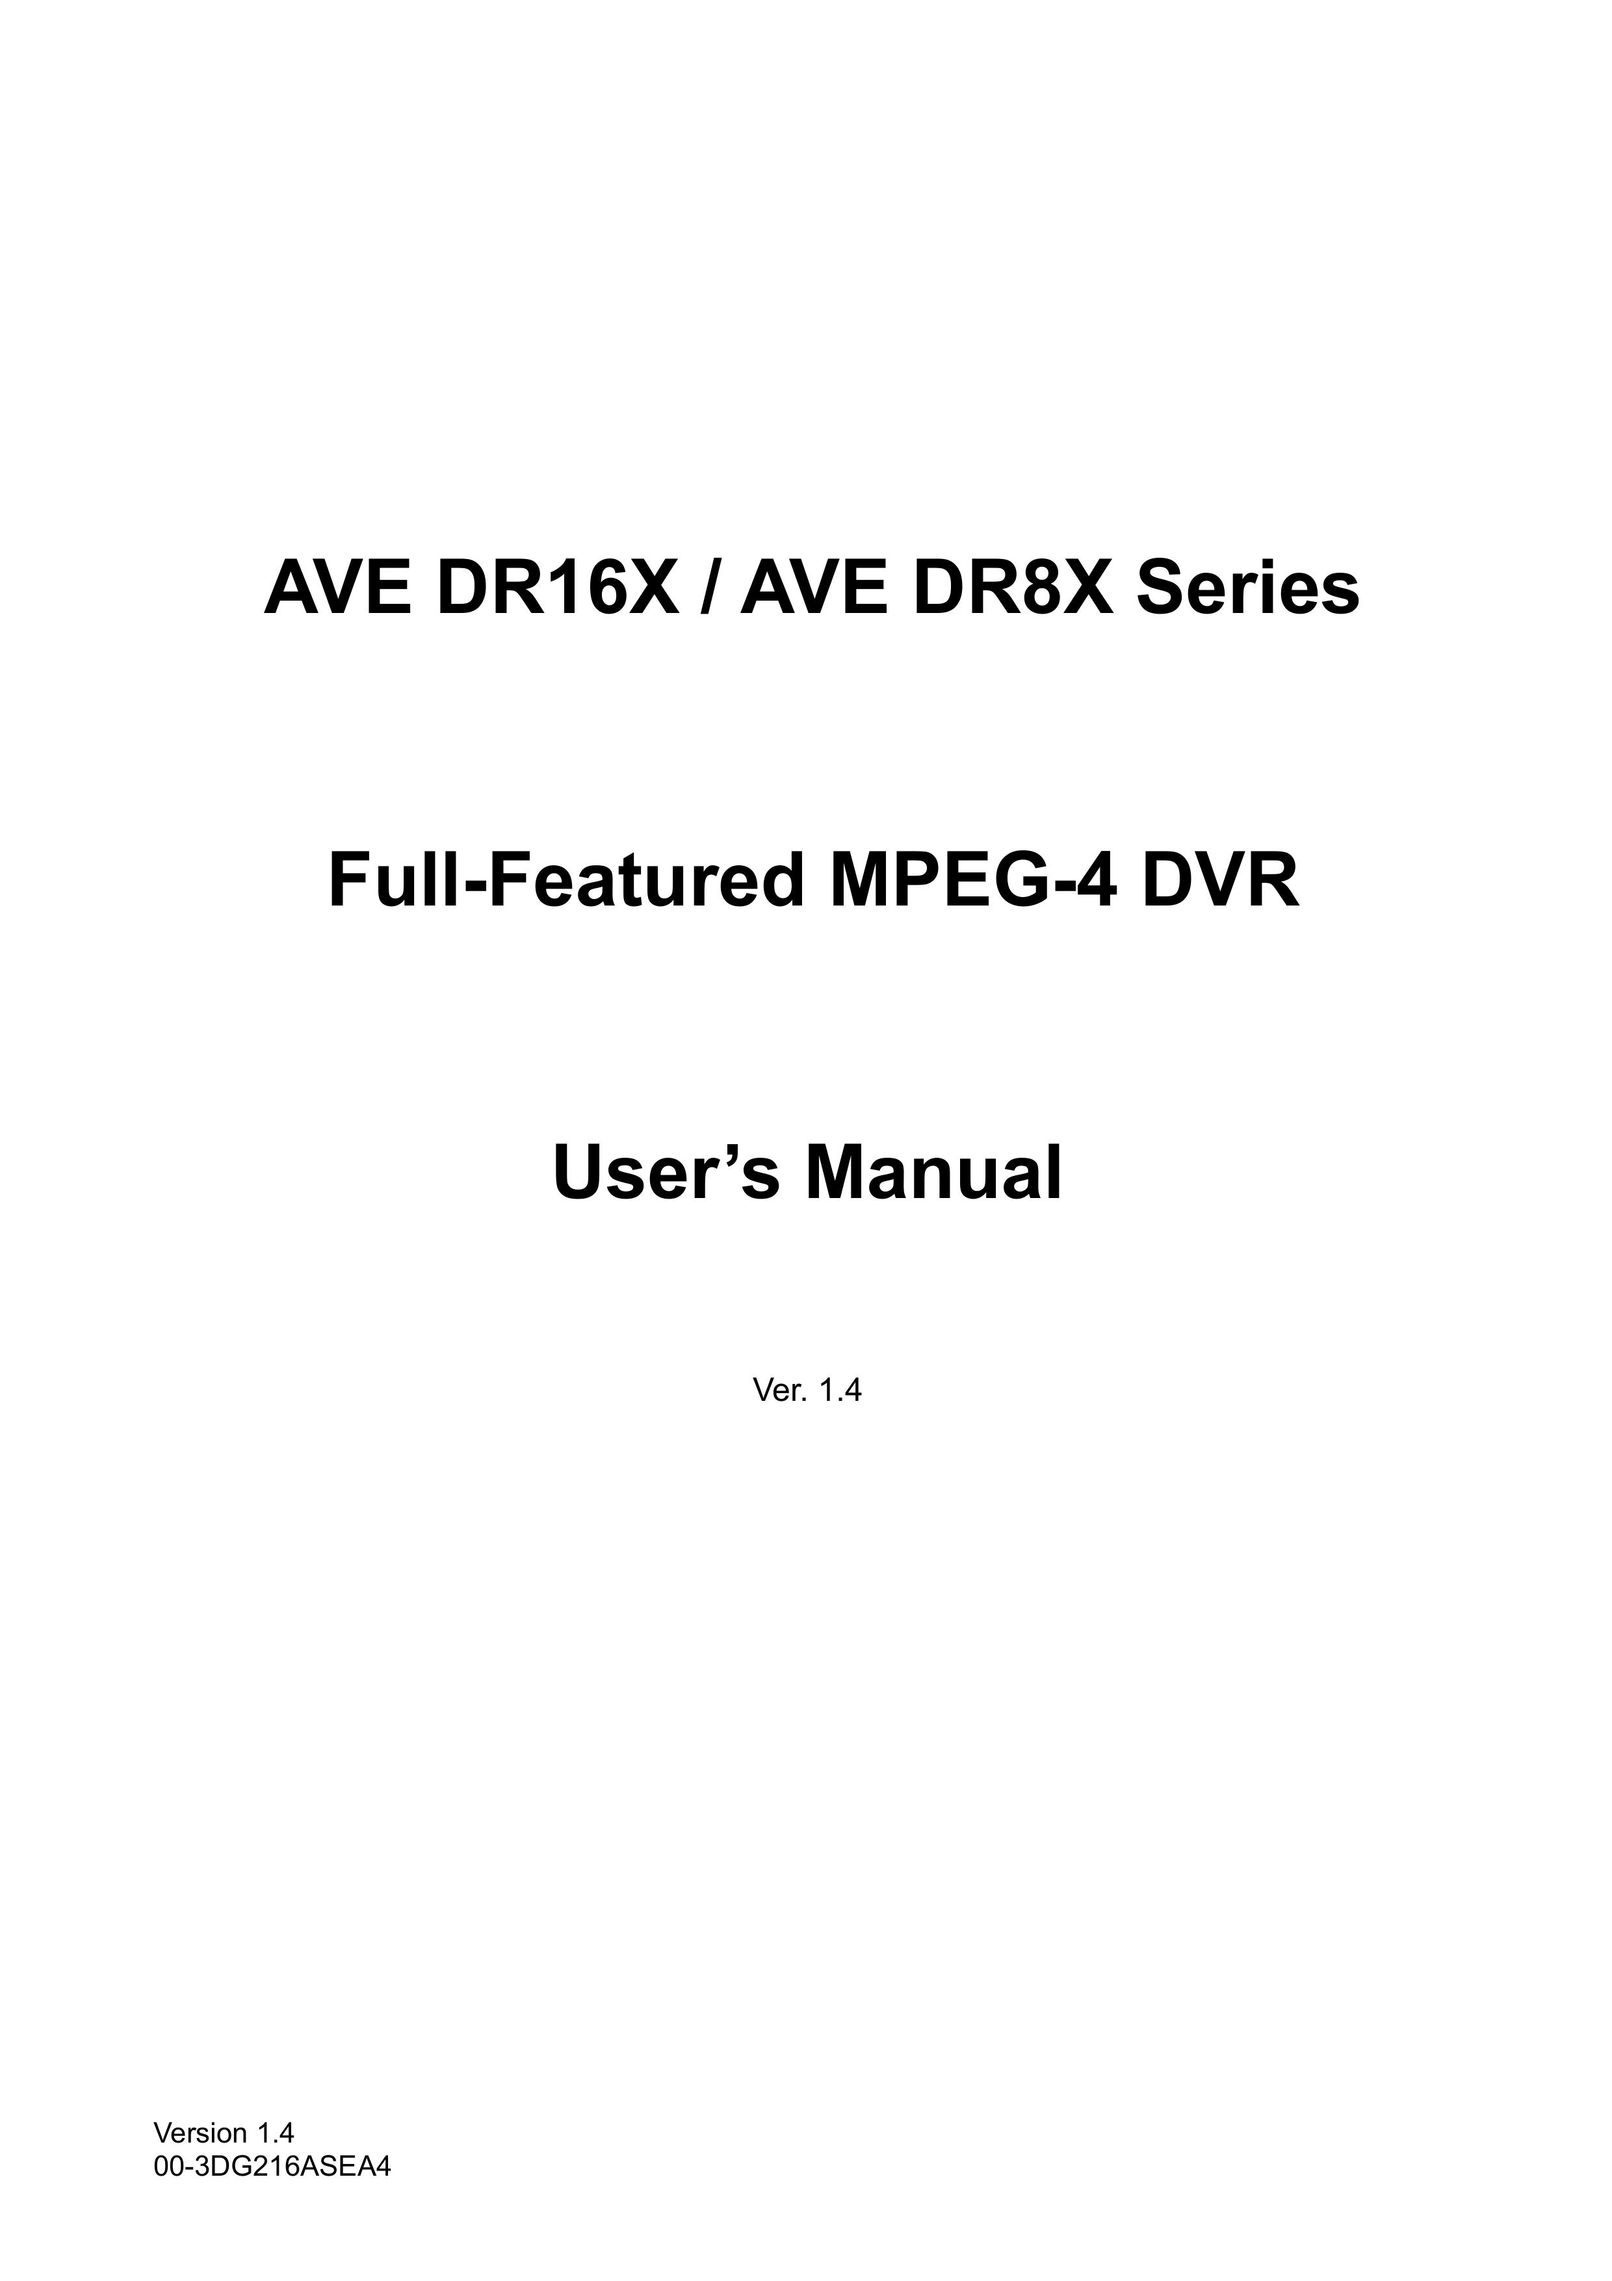 AVE AVE DR16X DVR User Manual